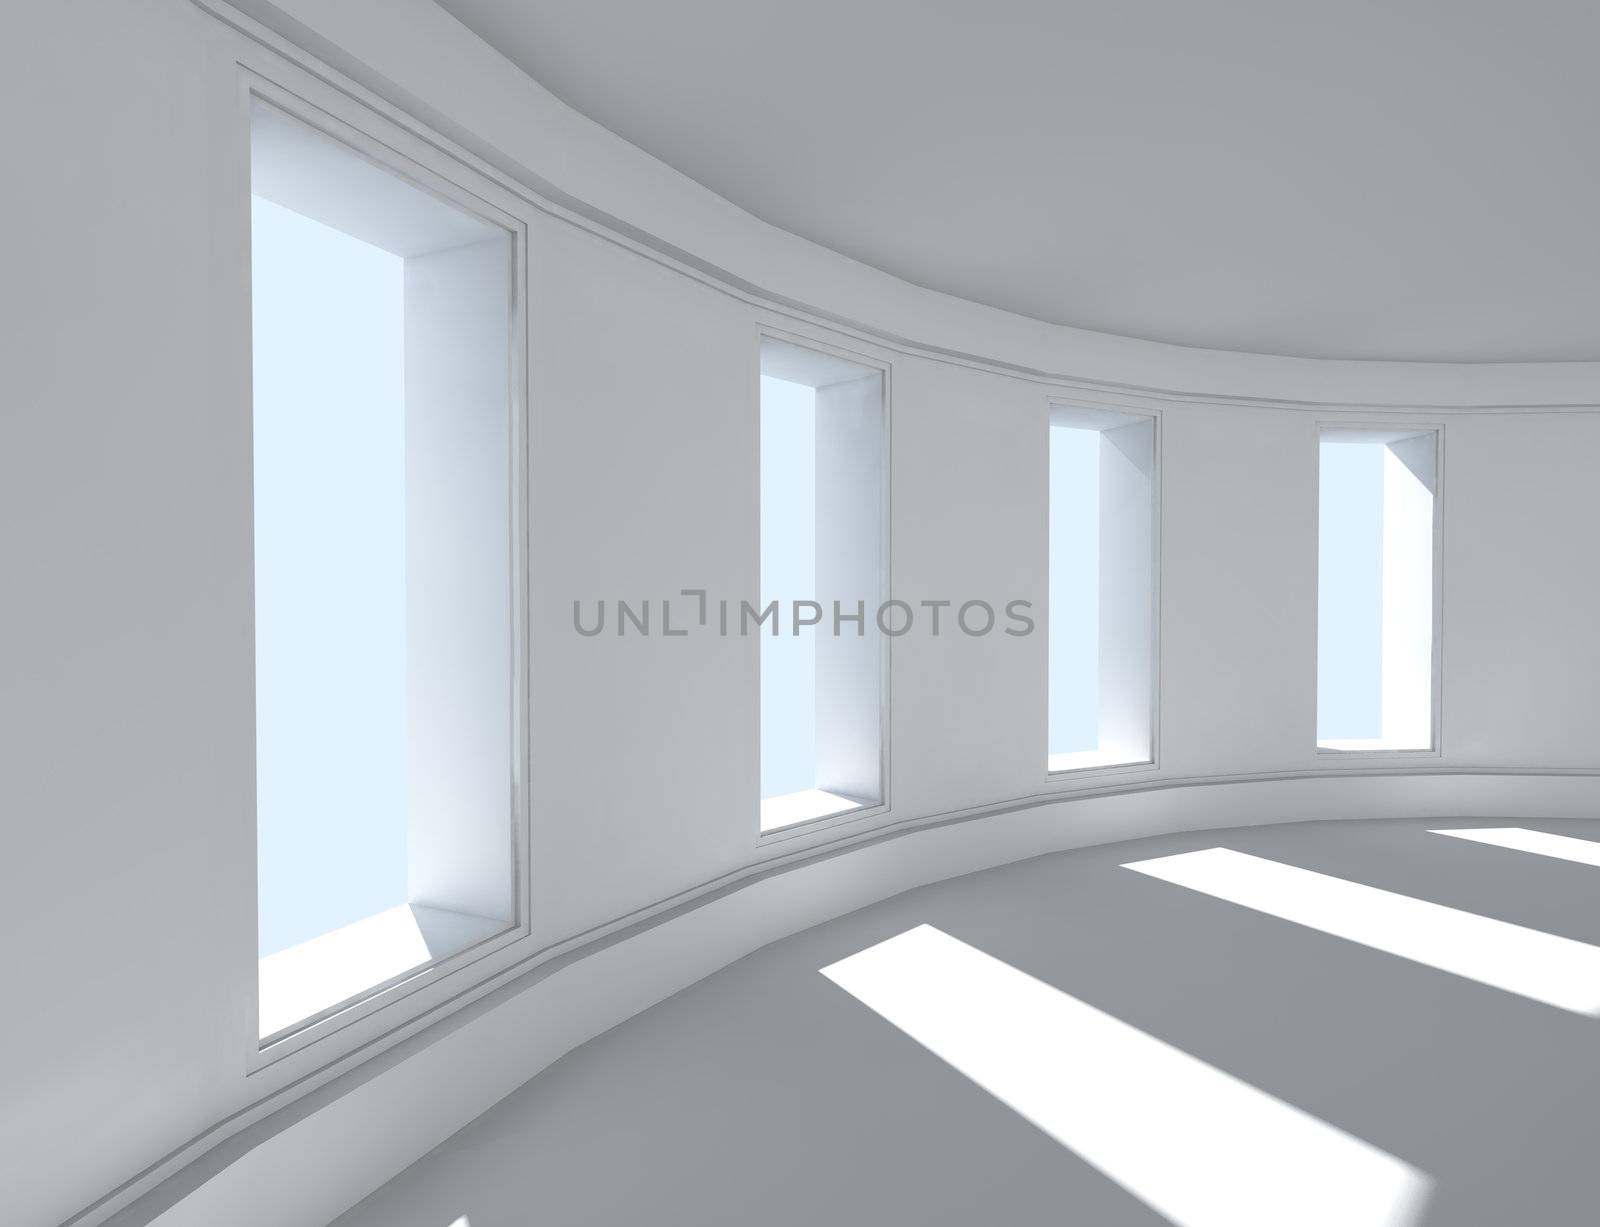 3d architecture of empty interior